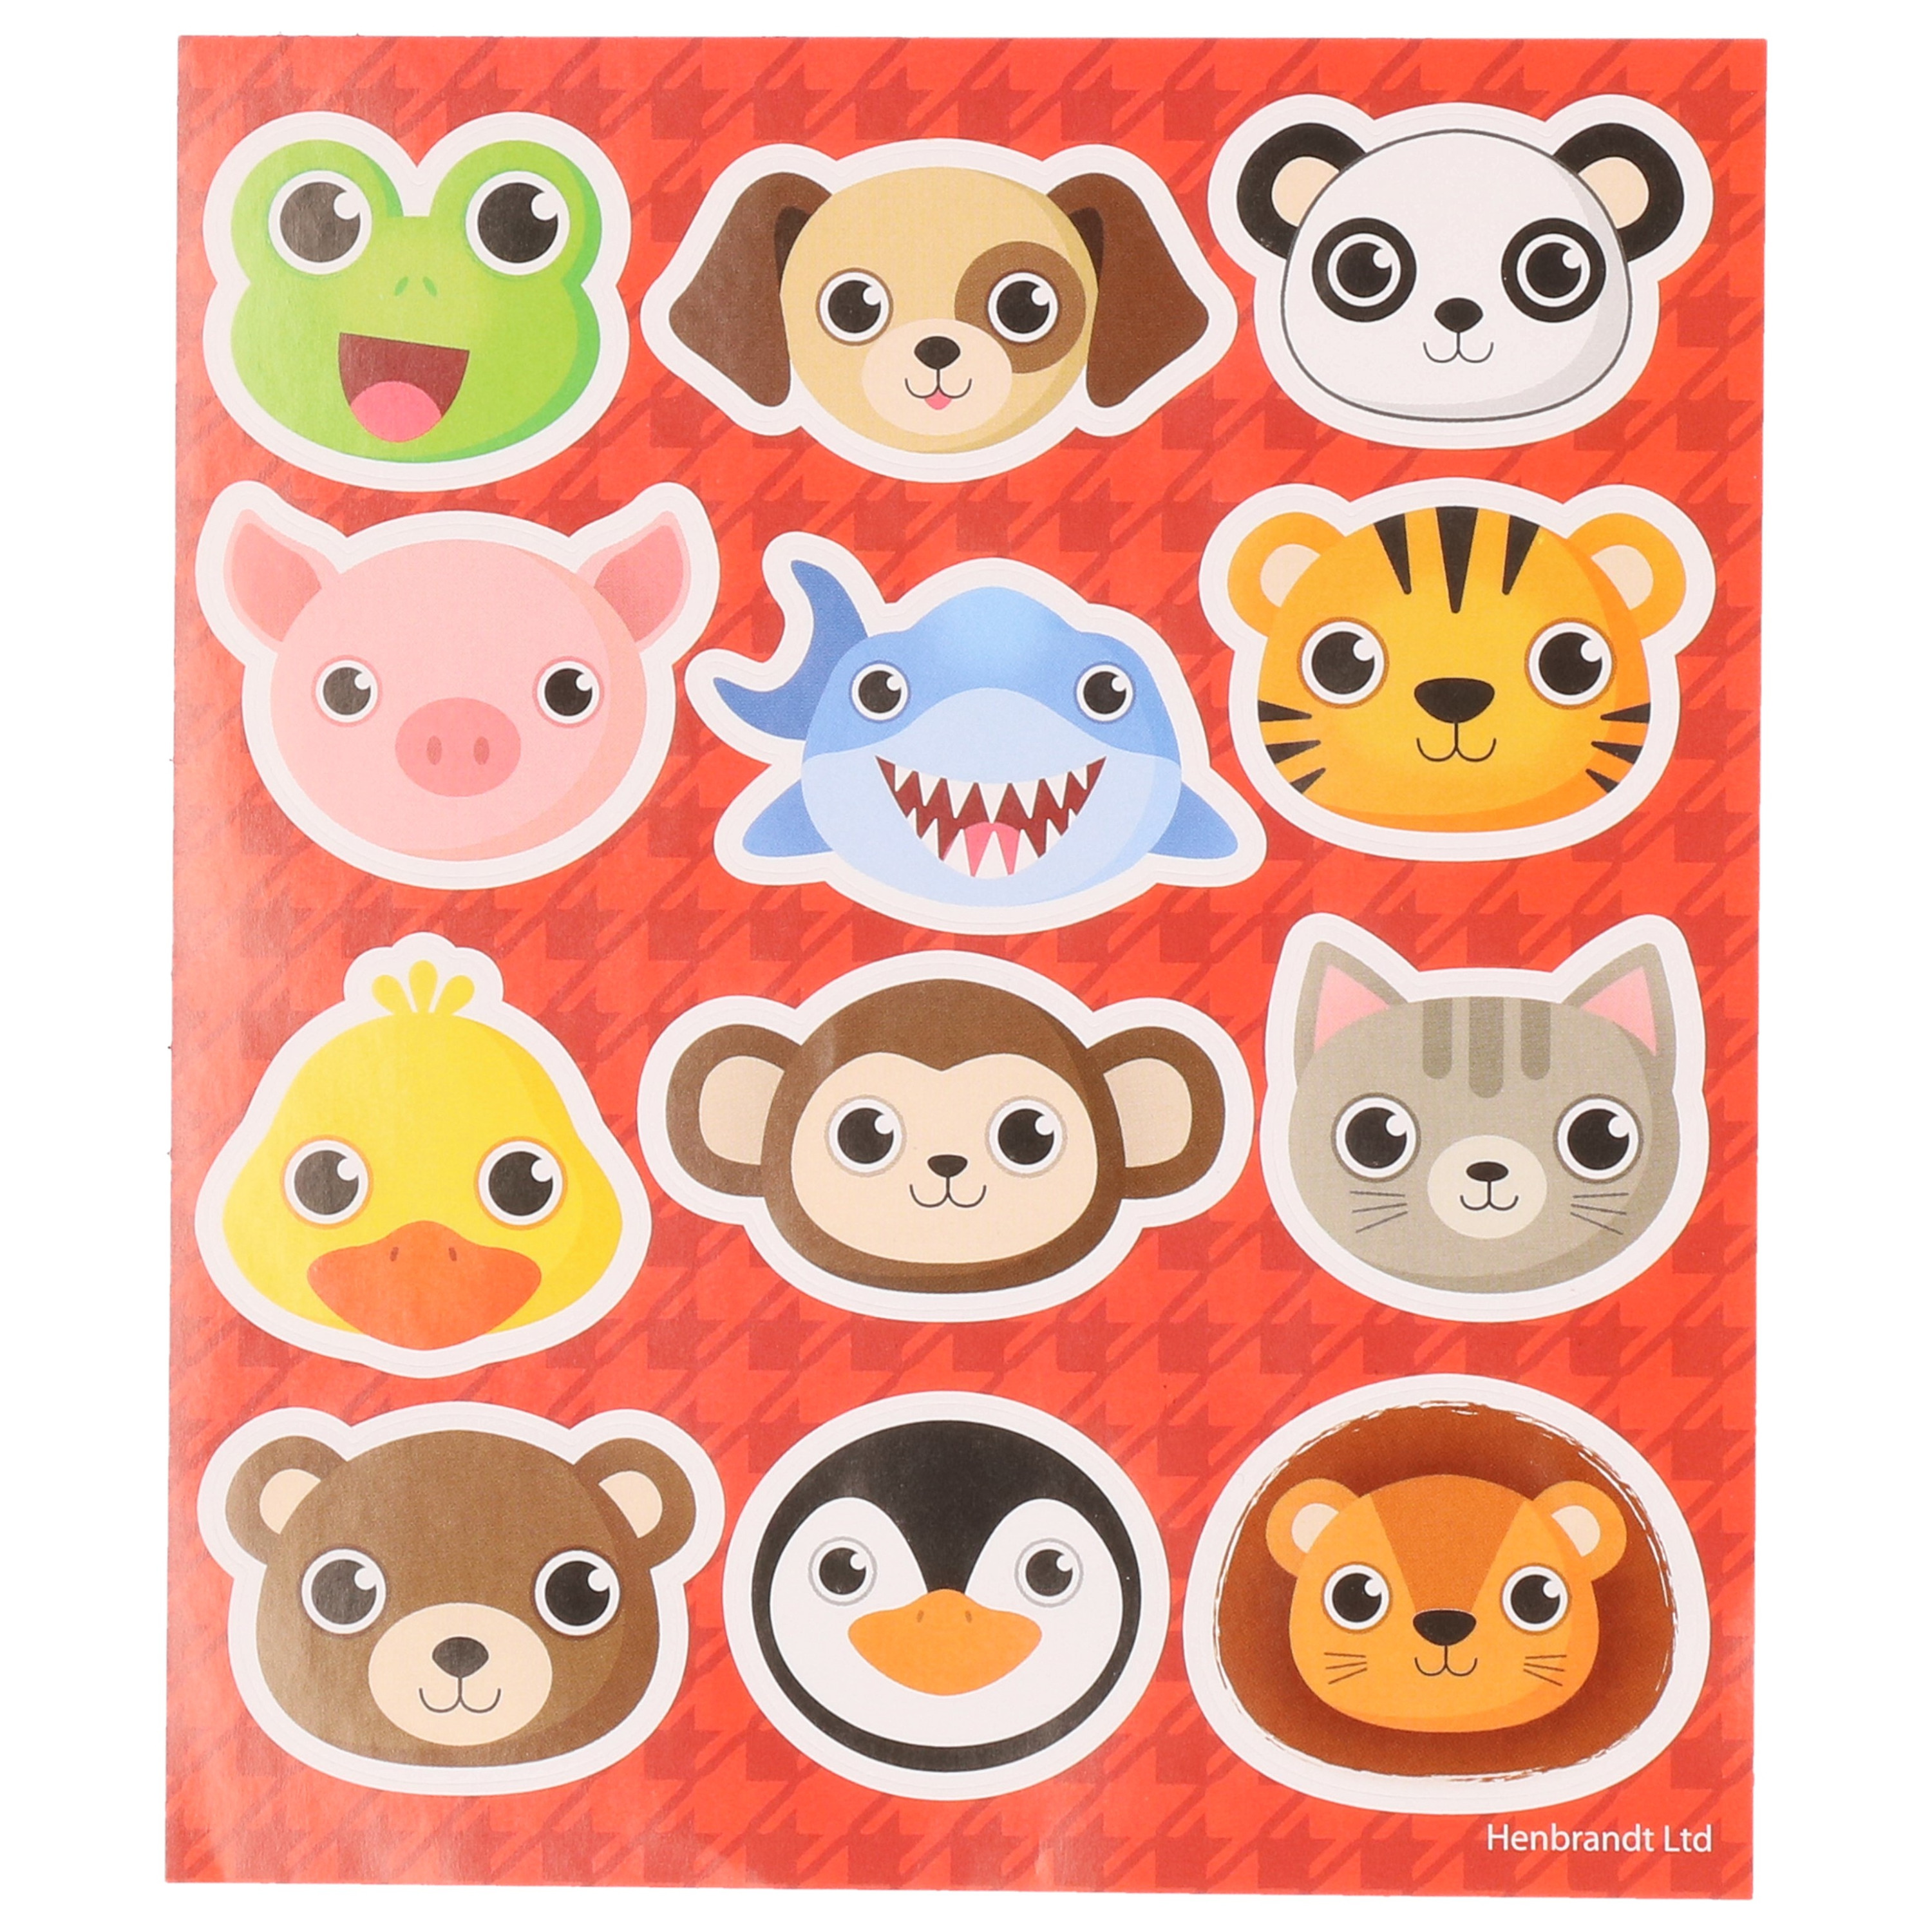 5x Velletjes agenda-dagboek-fun kinder dieren stickers 12 dieren per velletje van 10 x 12 cm